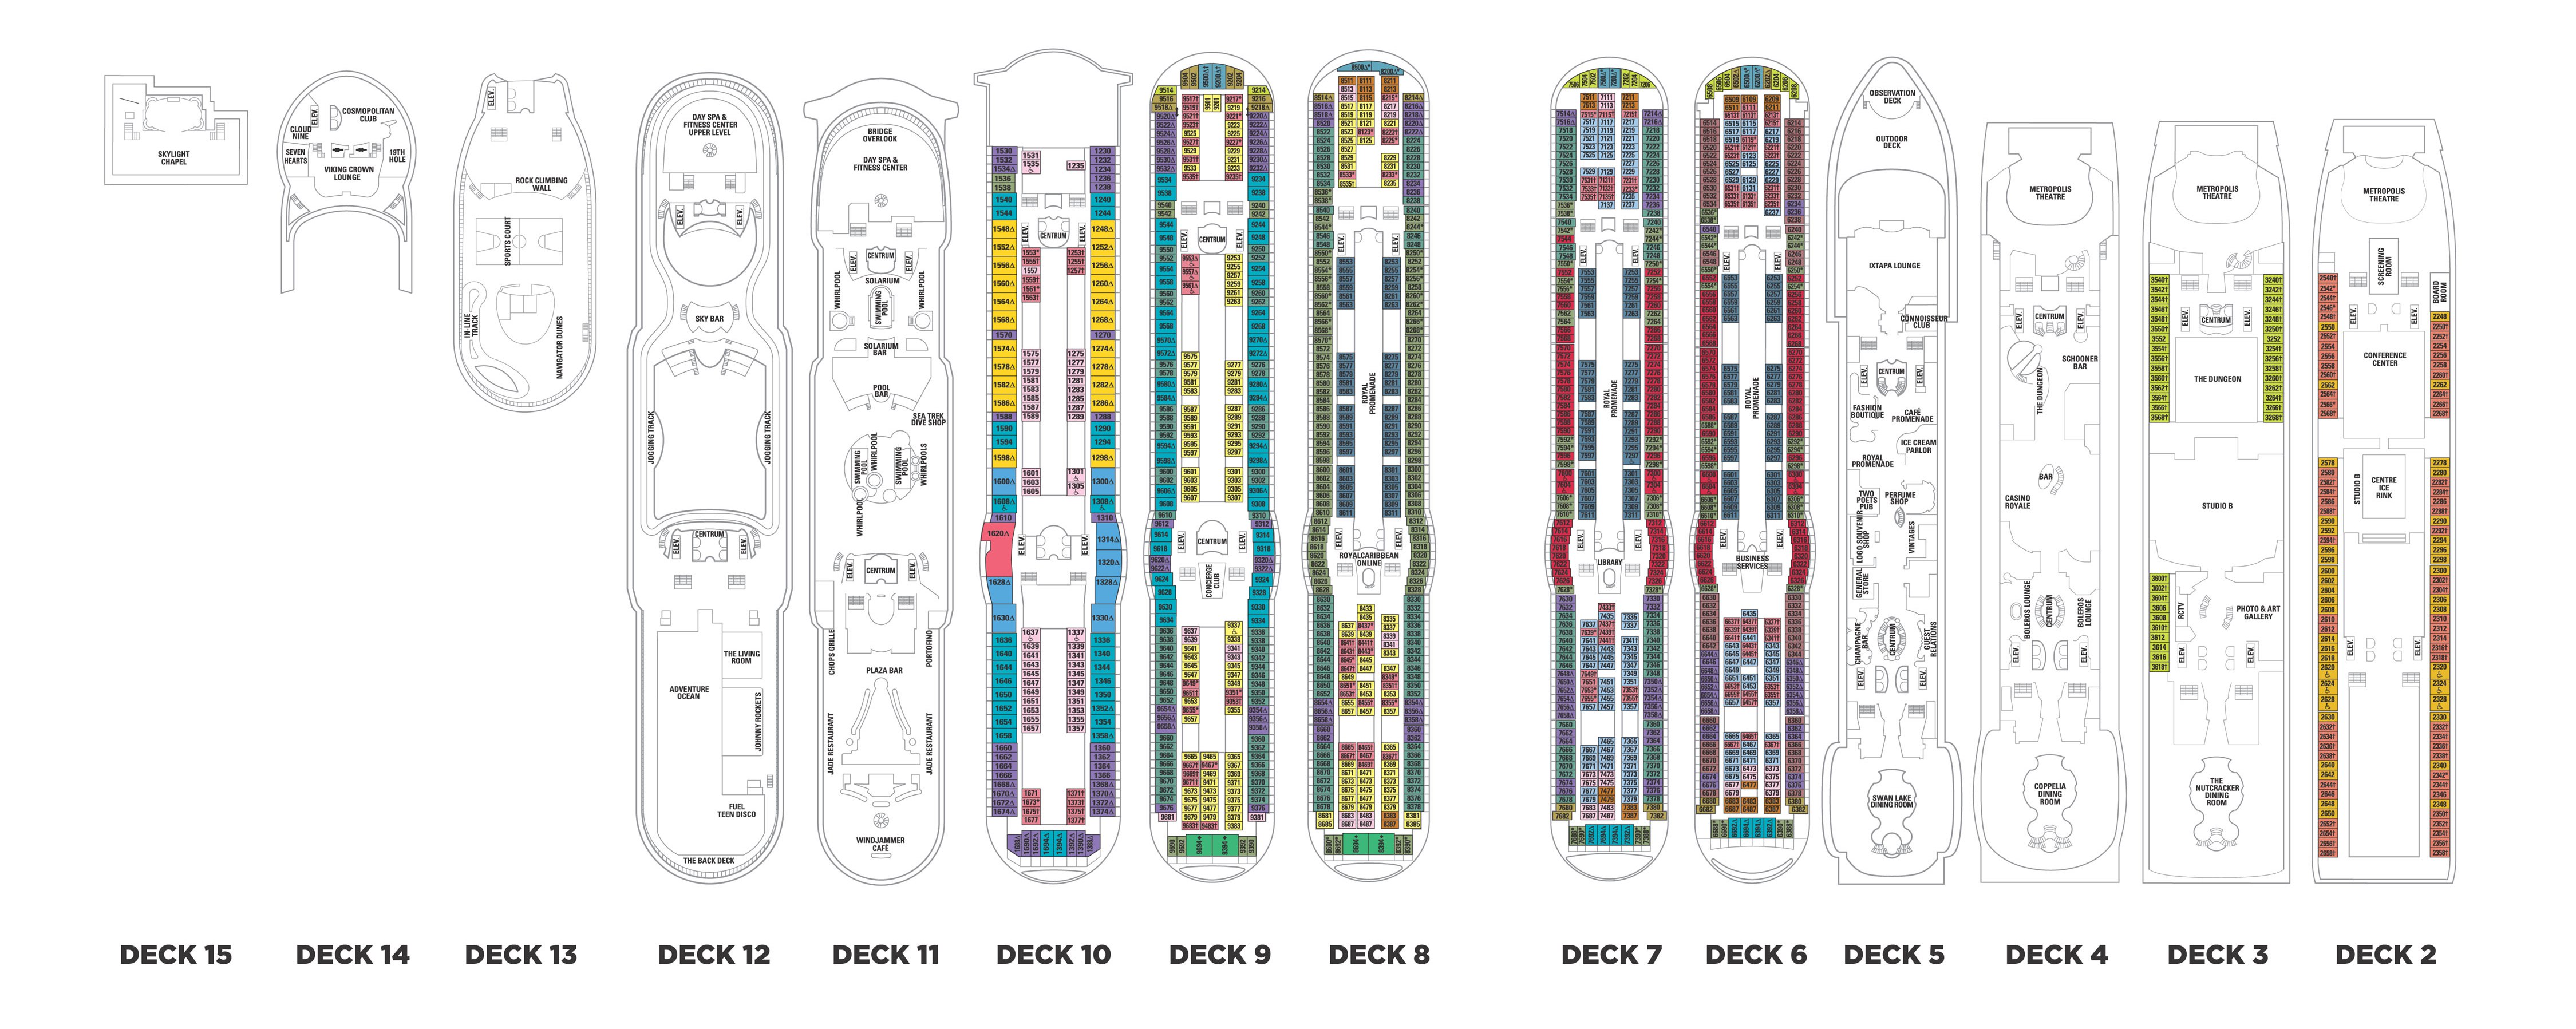 RCL Navigator of the Seas deck